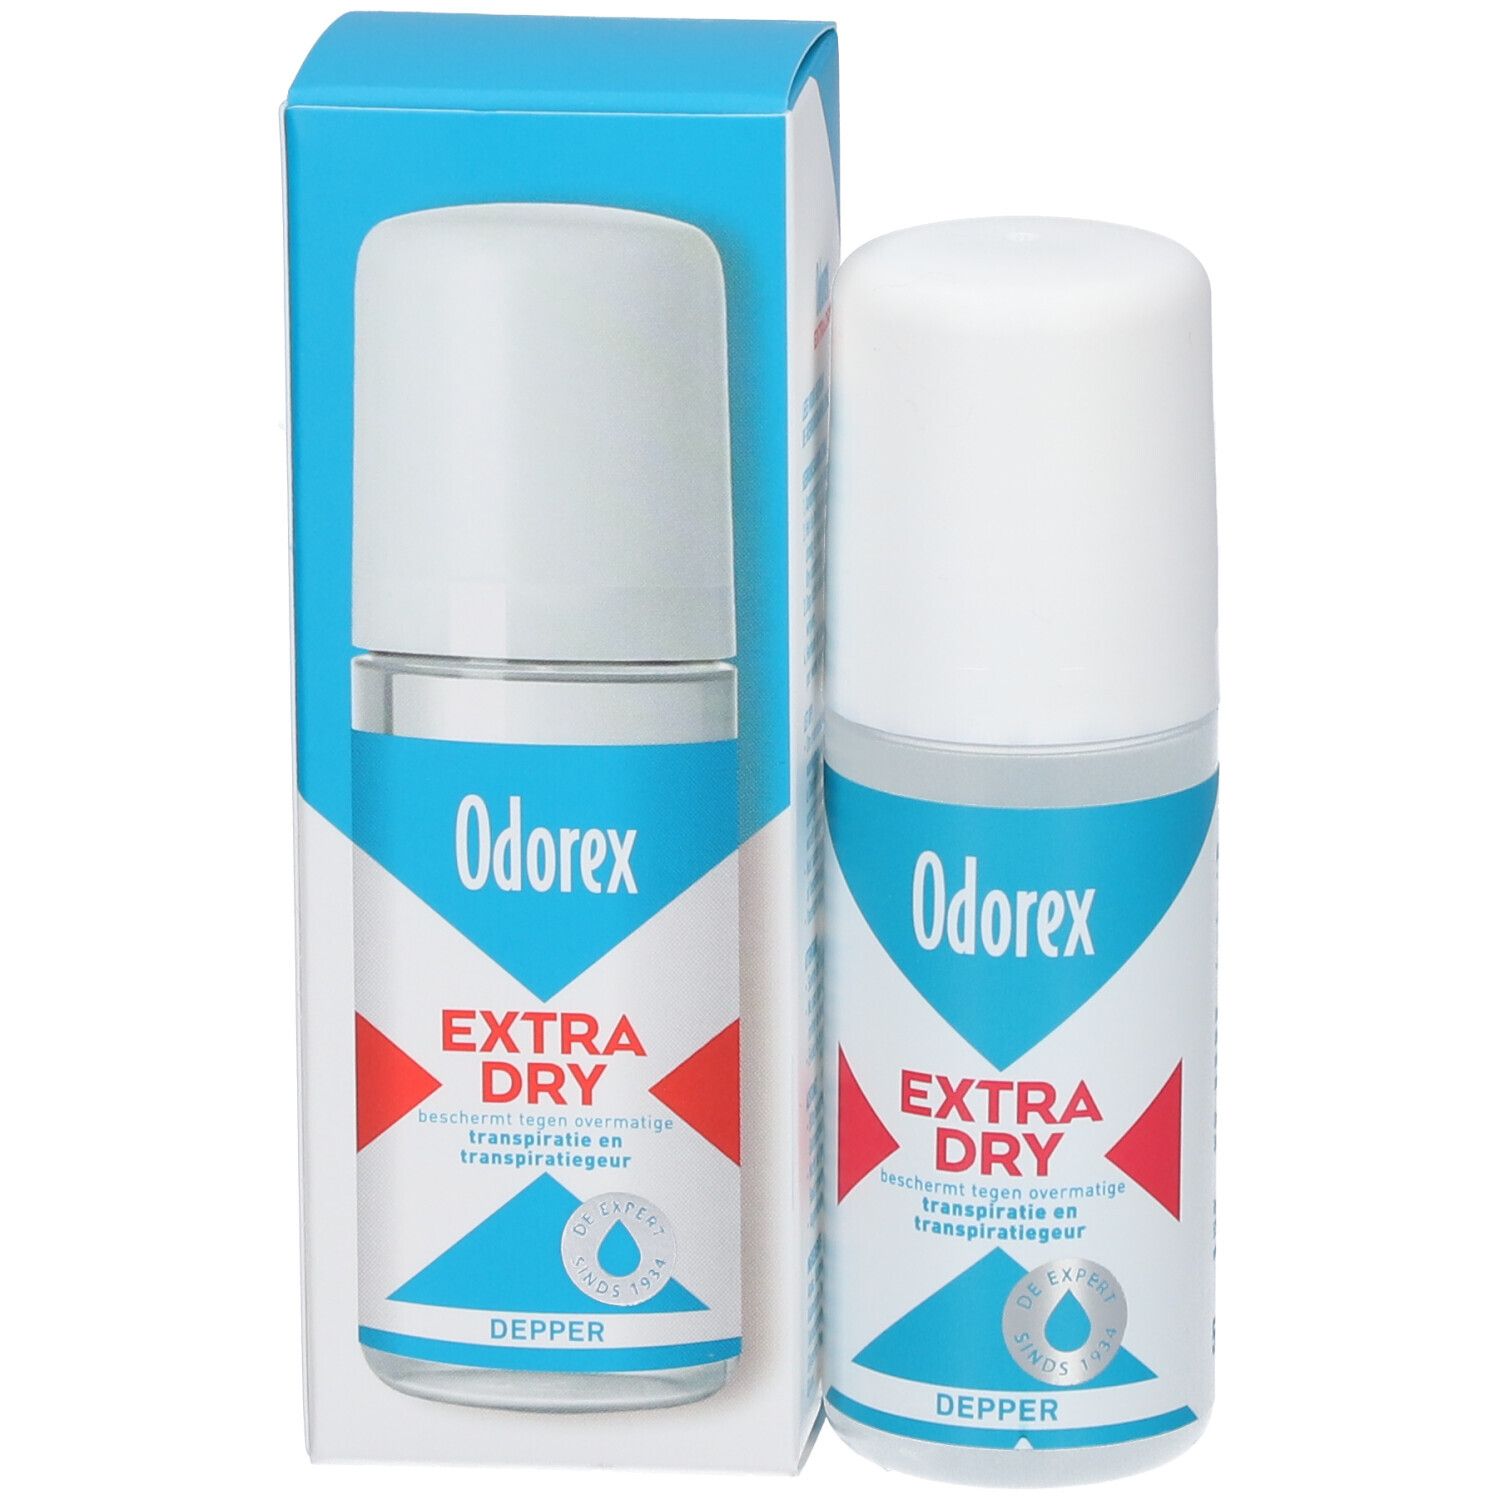 Odorex Extra Dry Depper Deo Roll-On